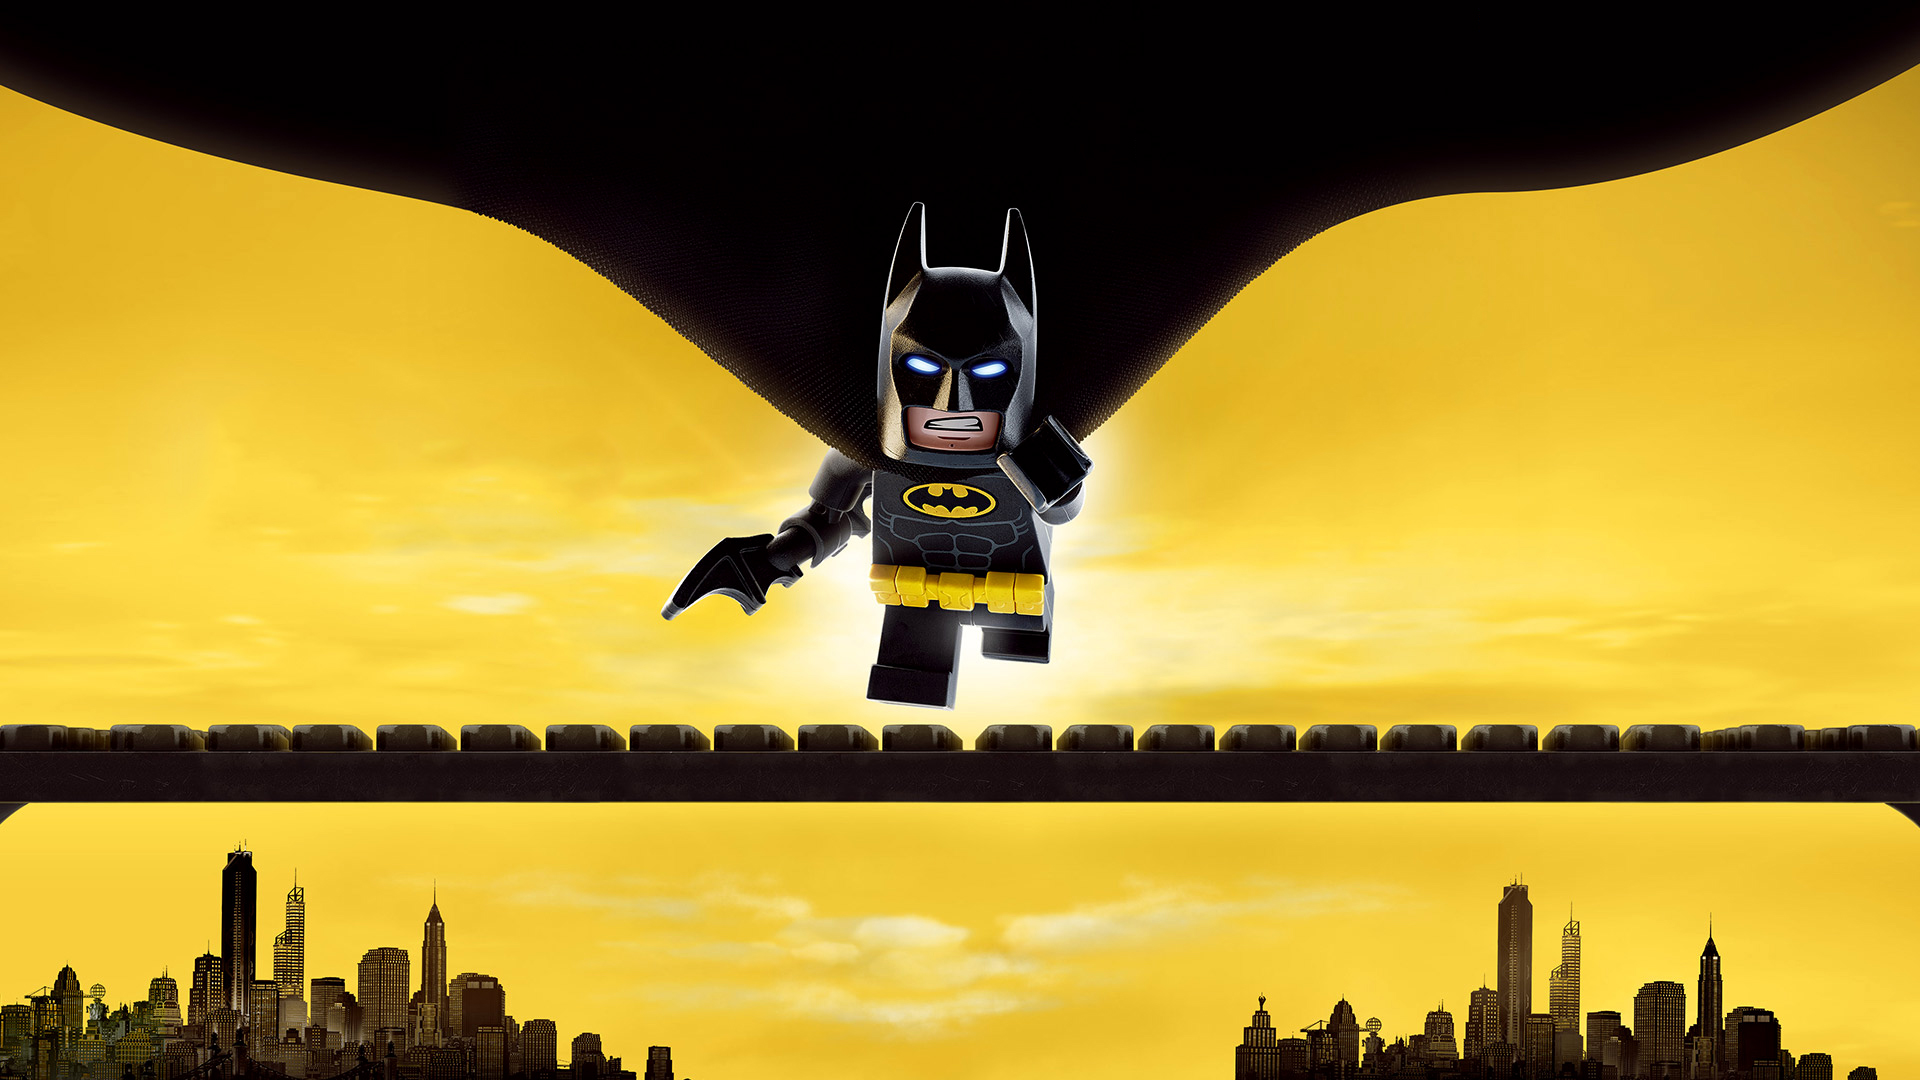 LEGO Batman - Download for PC Free